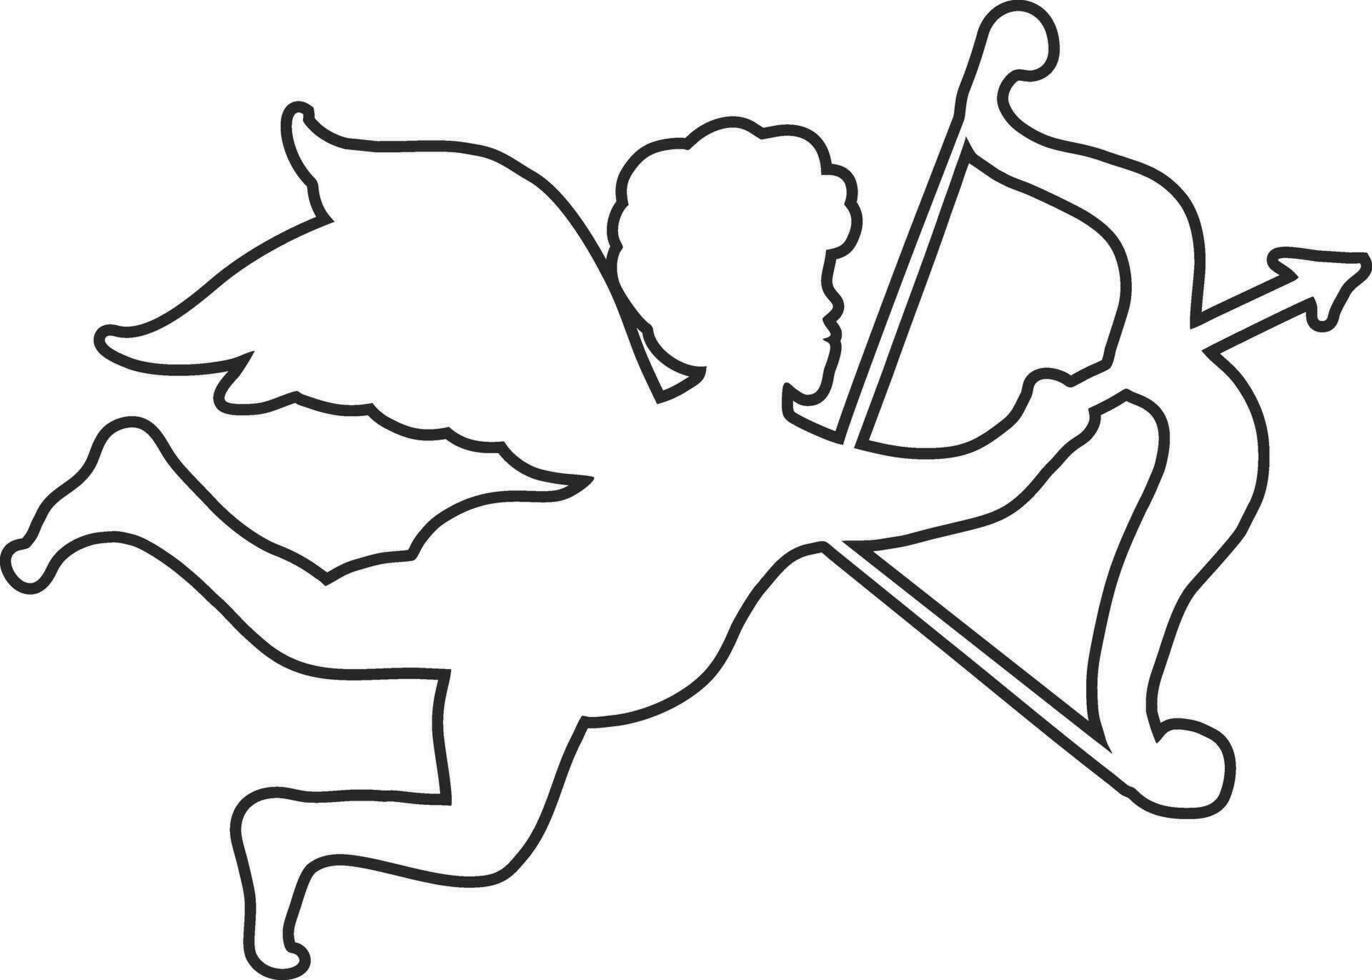 Cupid silhouette vector illustration